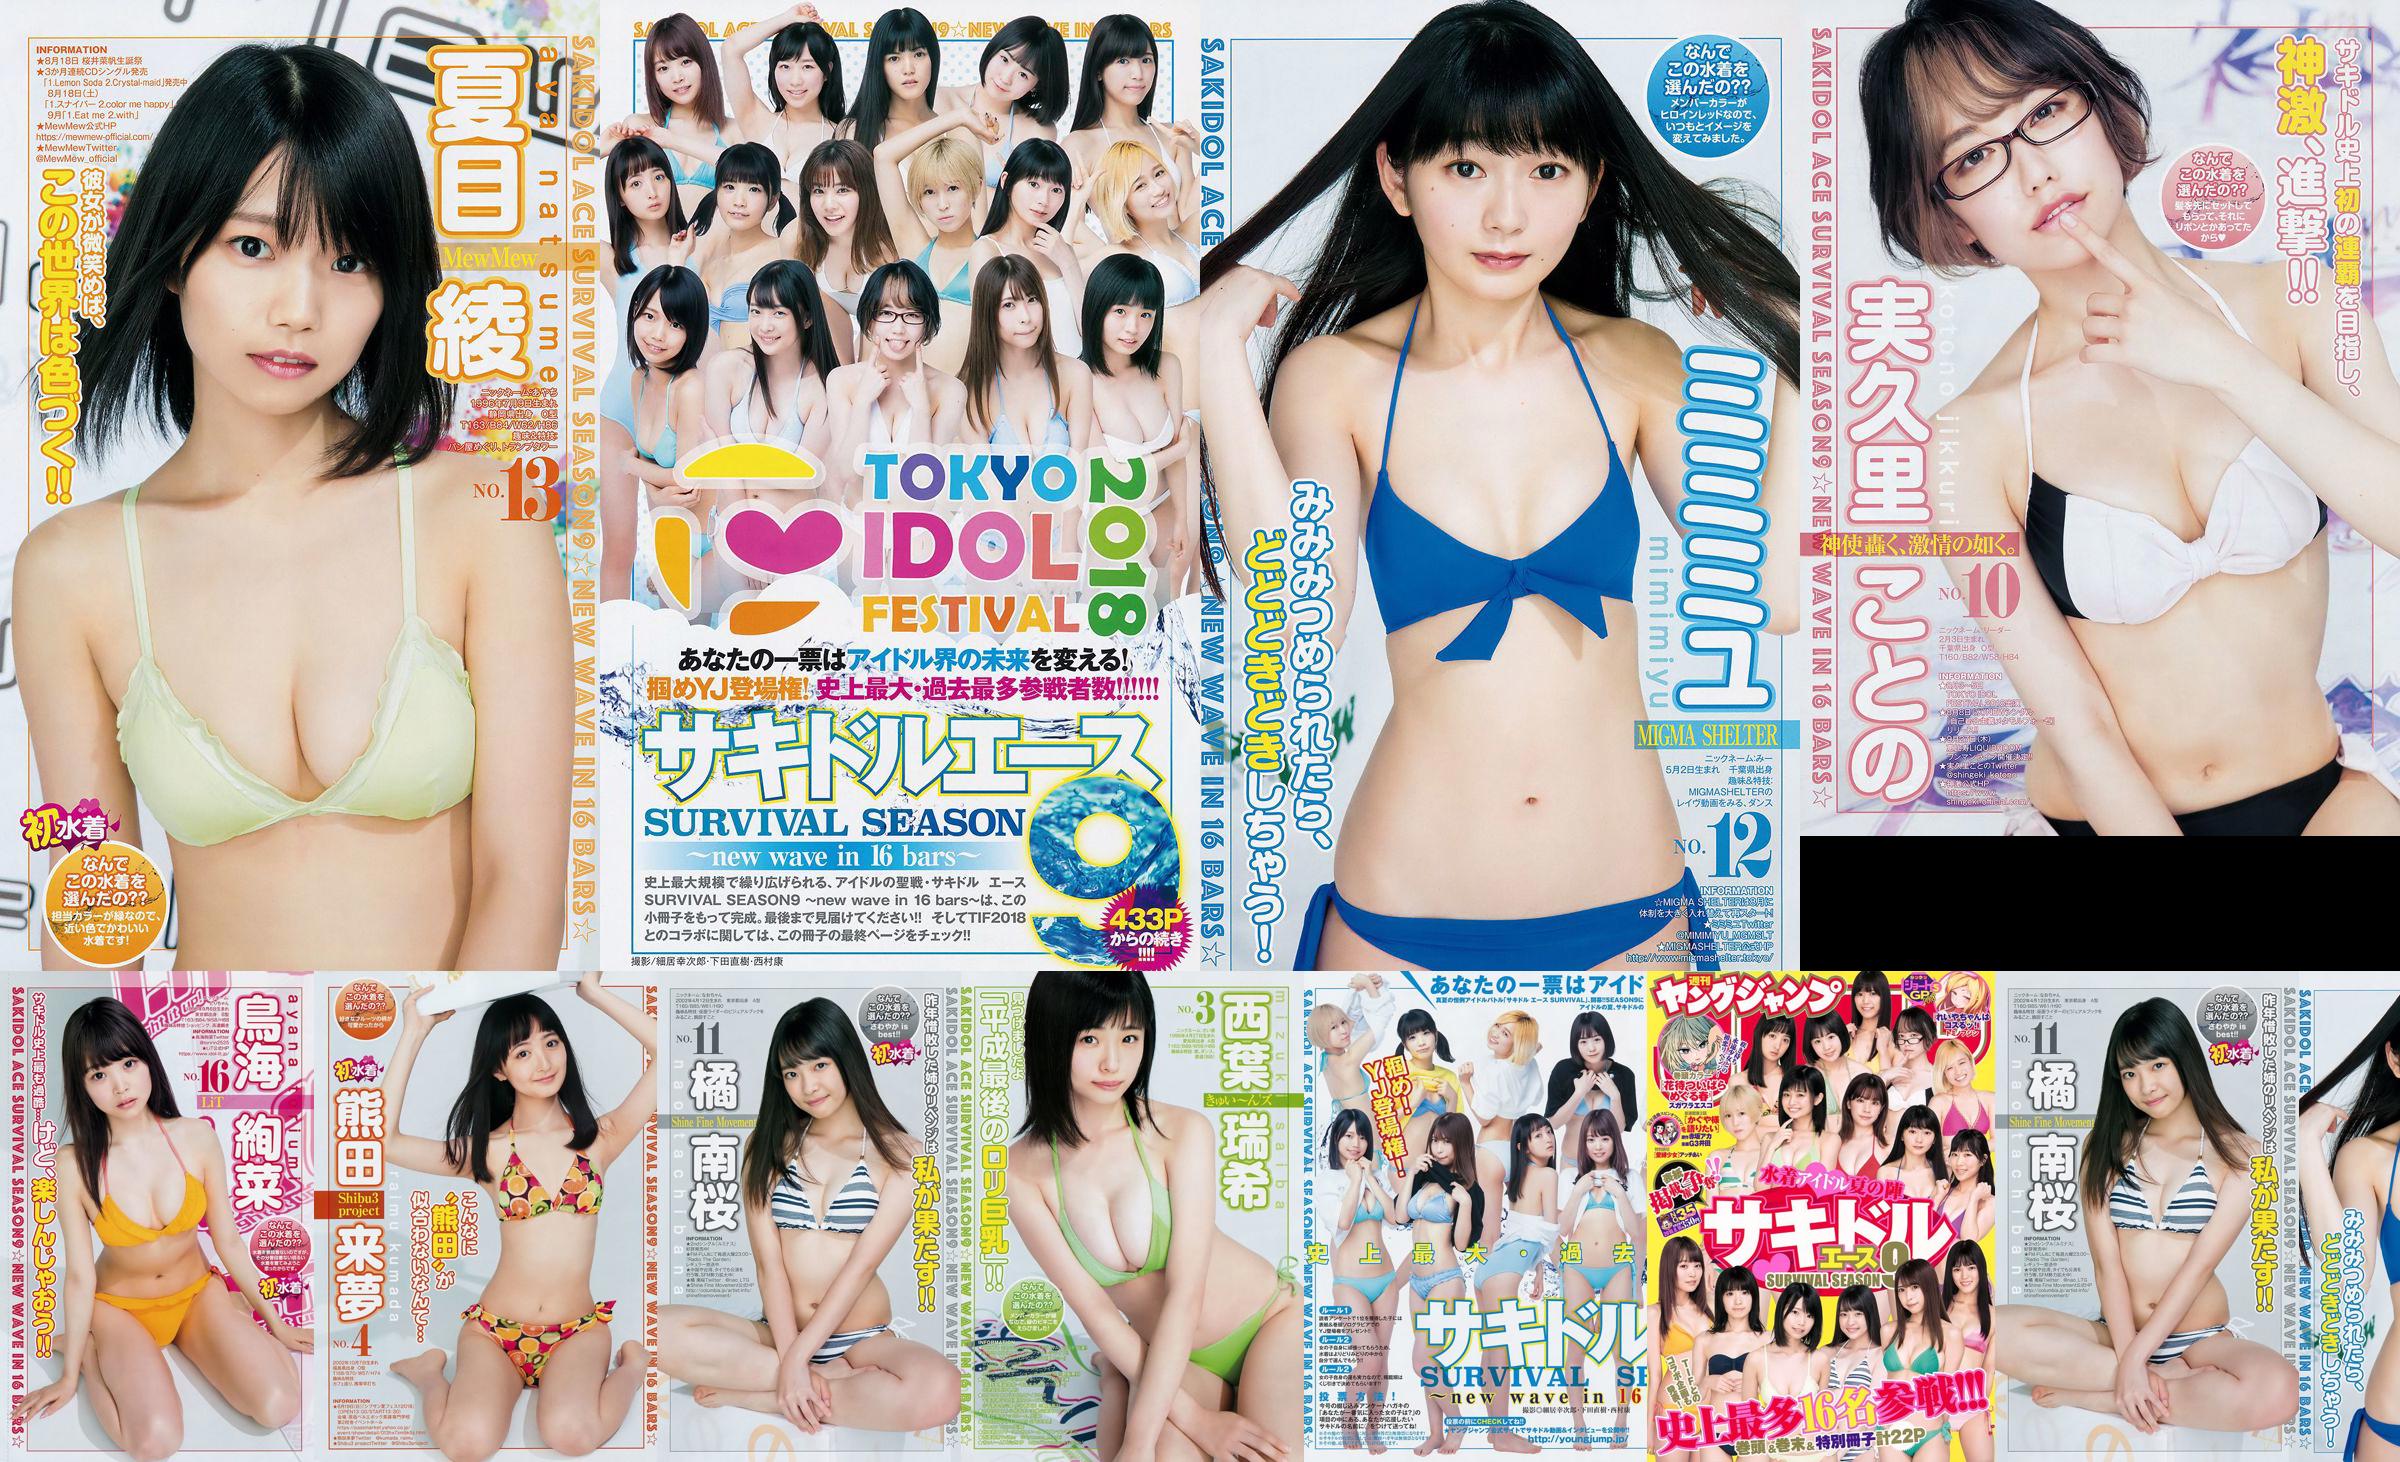 [FLASH] Ikumi Hisamatsu Risa Hirako Ren Ishikawa Angel Moe AKB48 Kaho Shibuya Misuzu Hayashi Ririka 2015.04.21 รูปภาพ Toshi No.e6cabc หน้า 2